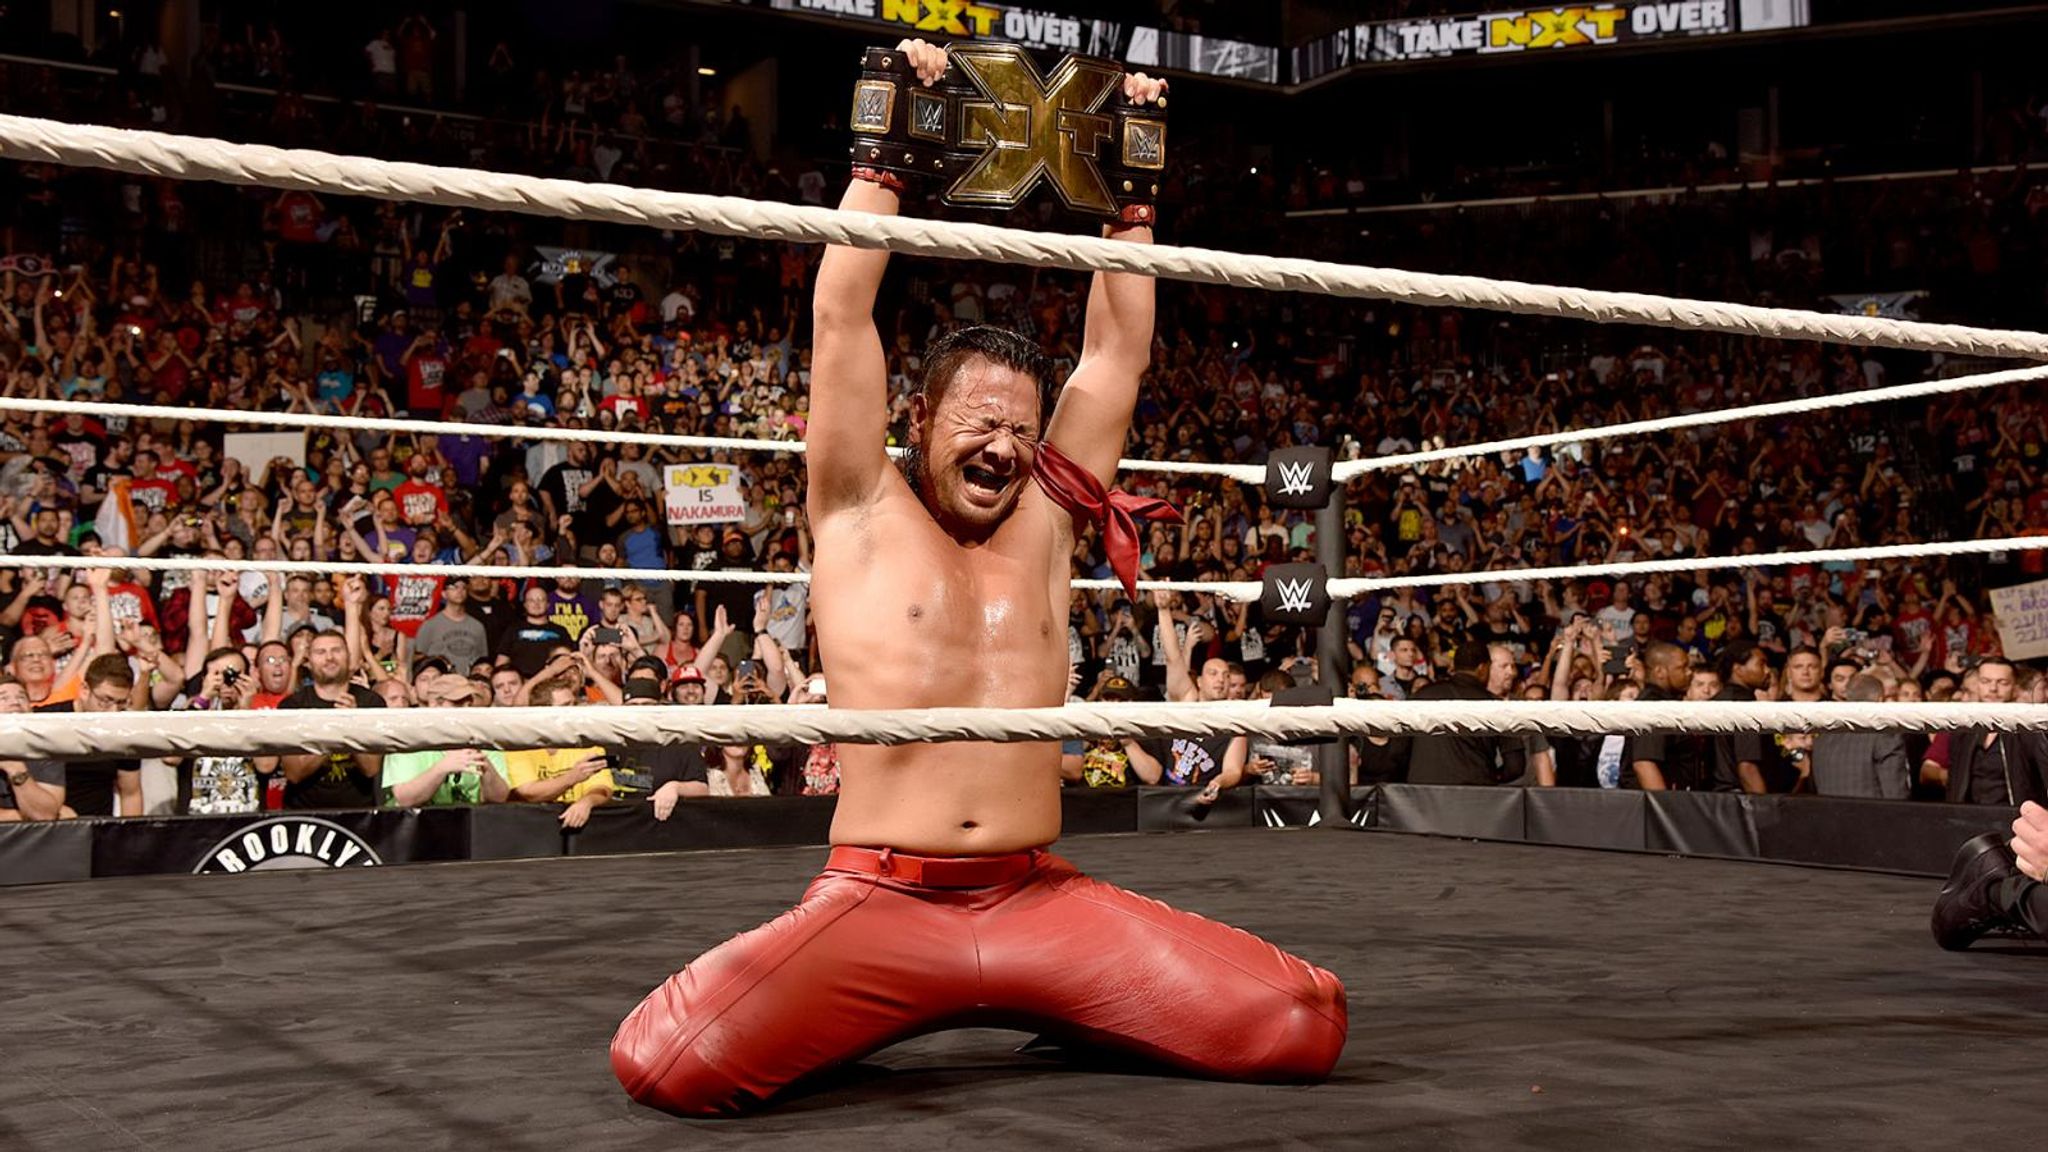 WWE Royal Rumble: Shinsuke Nakamura triumphs and sets up